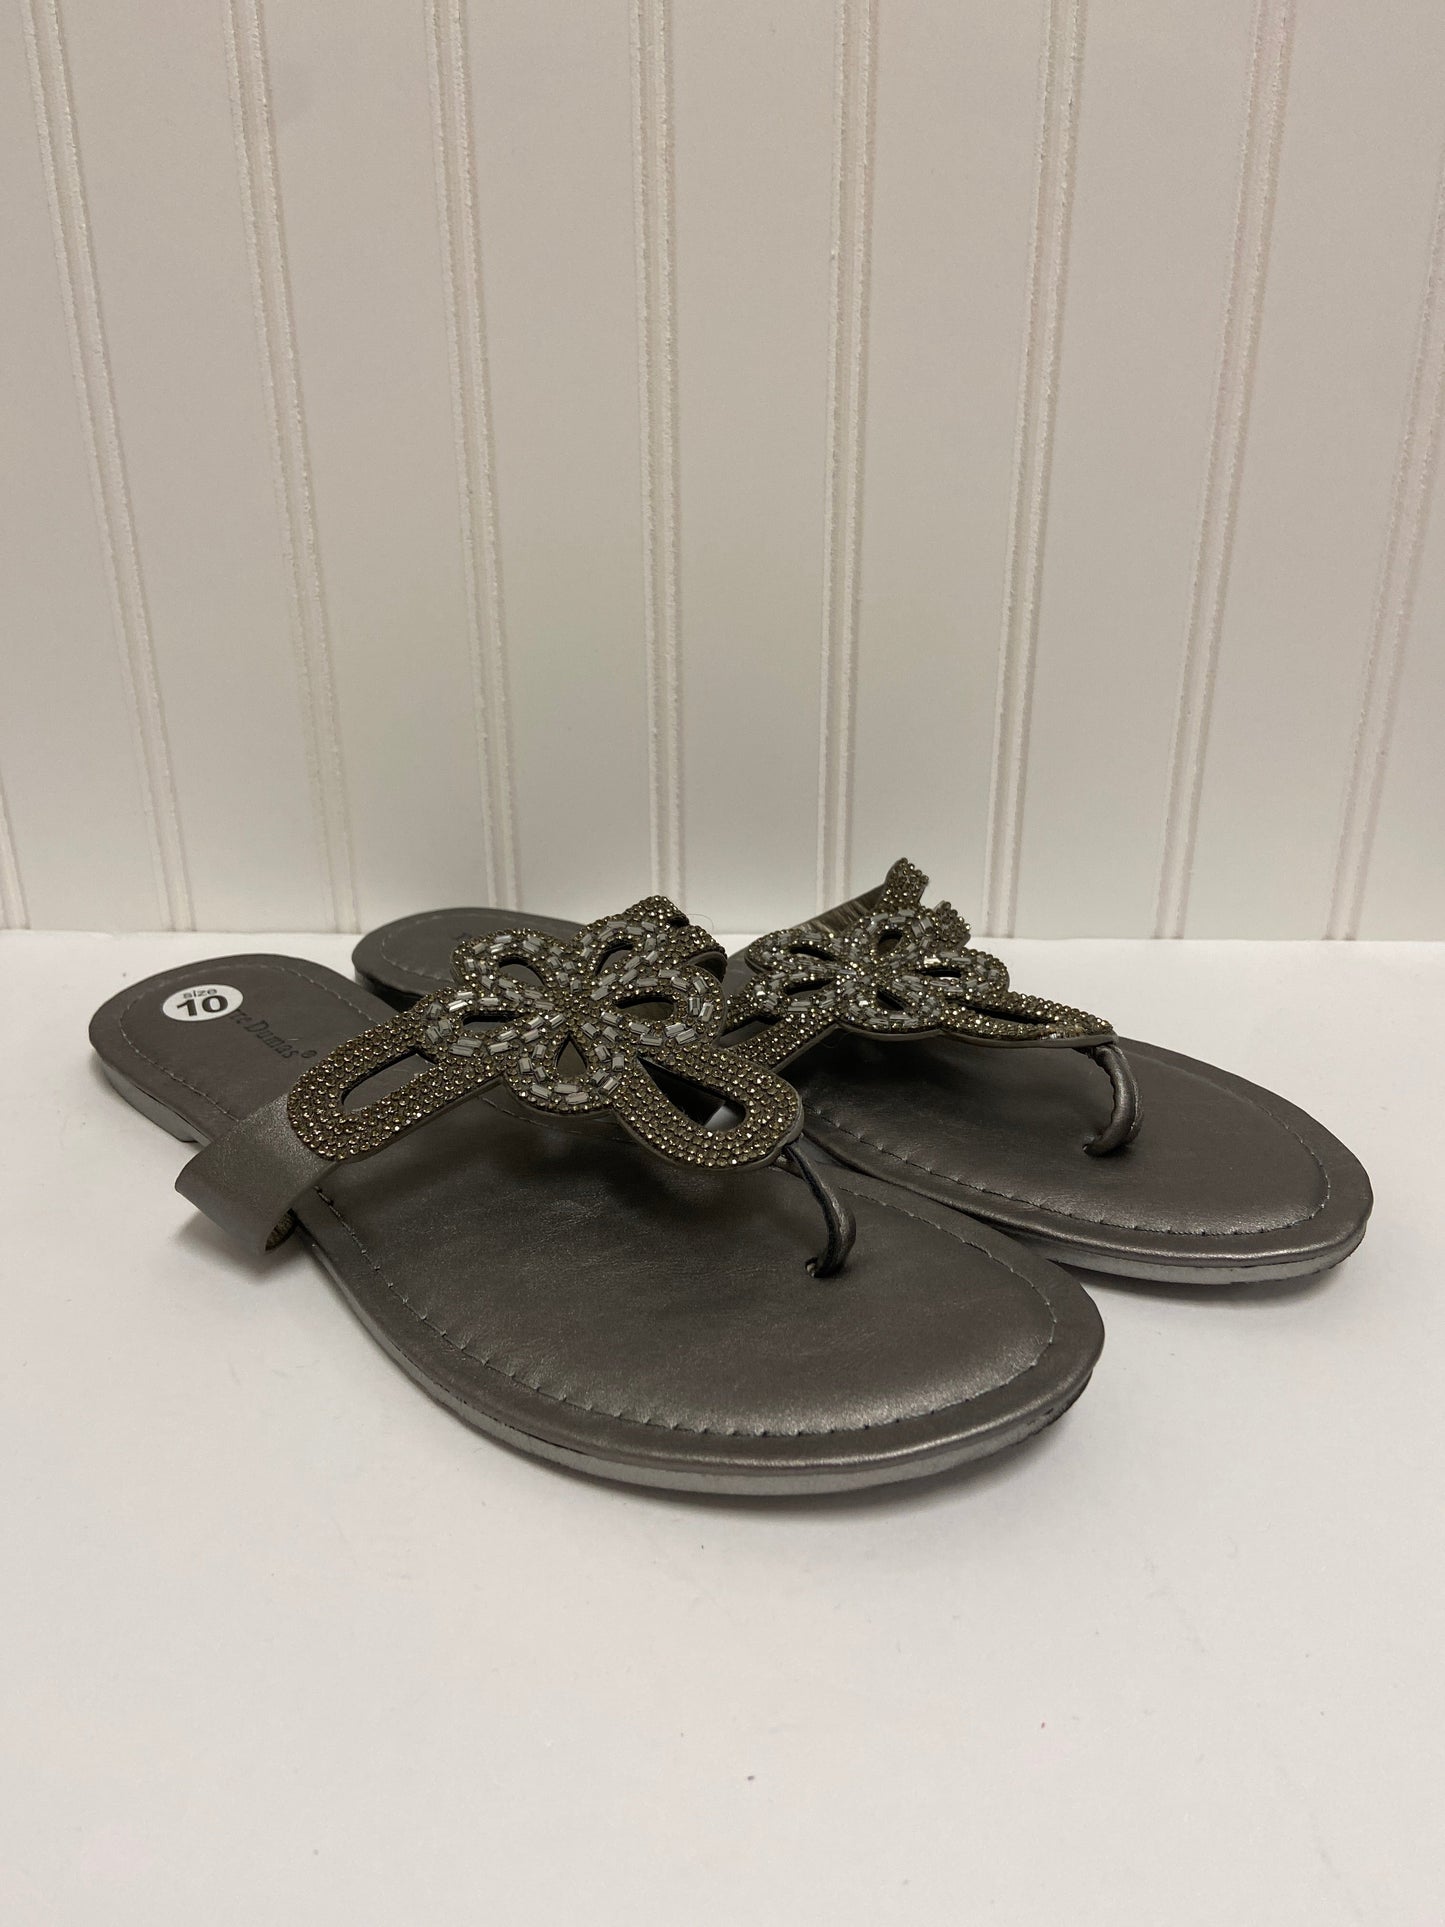 Sandals Flip Flops By Pierre Dumas  Size: 10